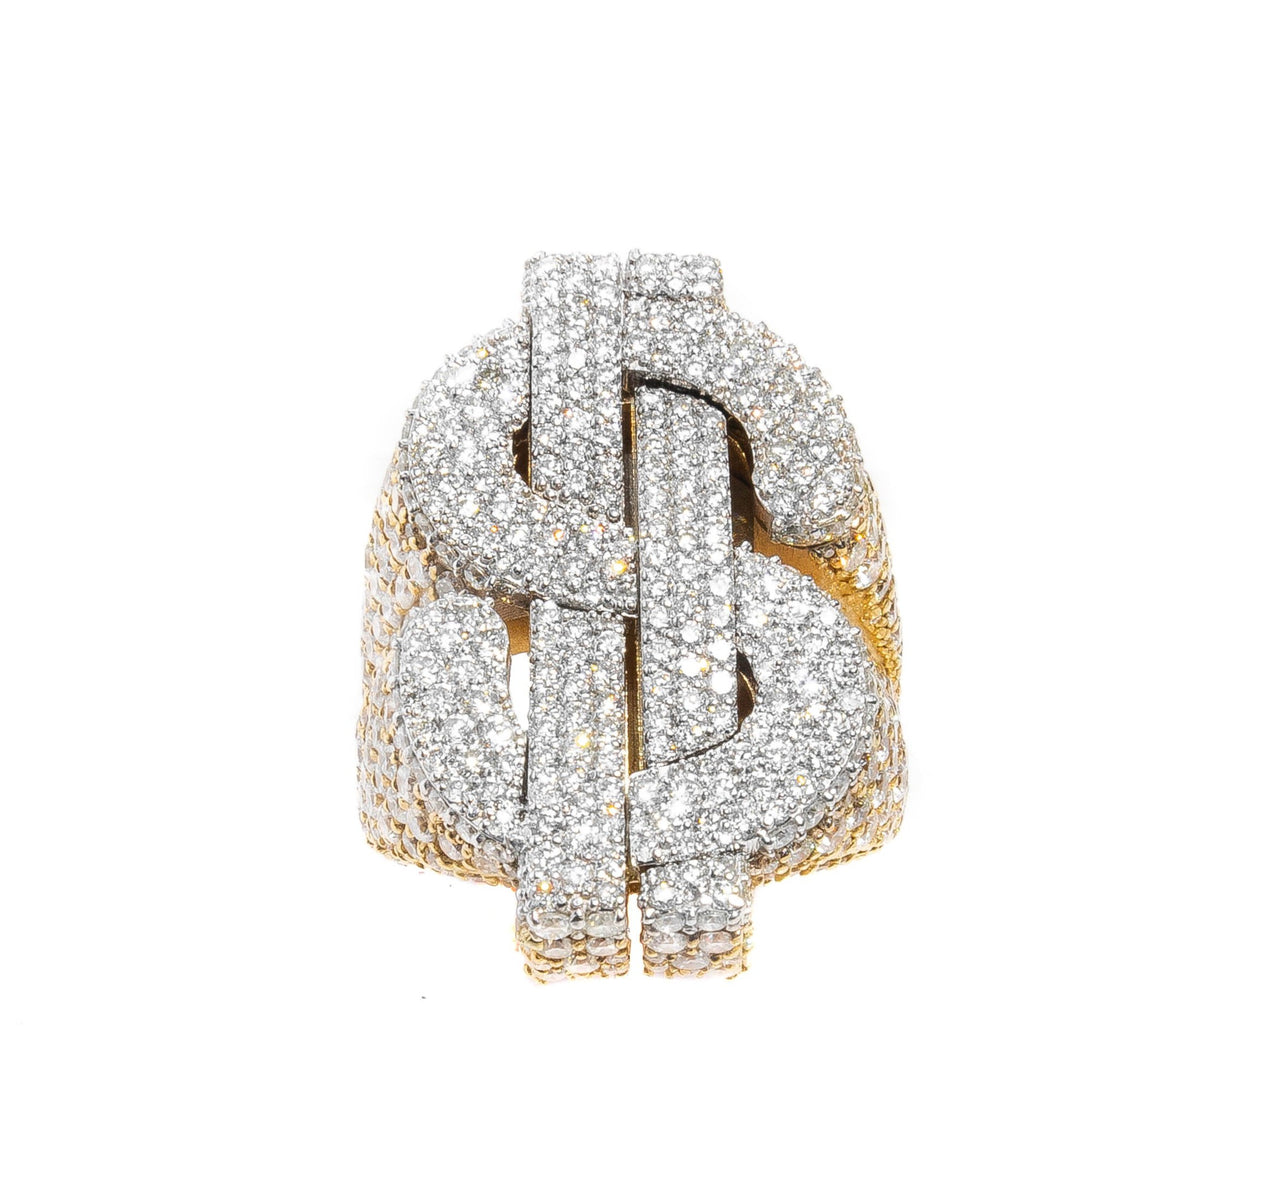 Y/W Diamond Dollar Sign Ring 11.01 ctw